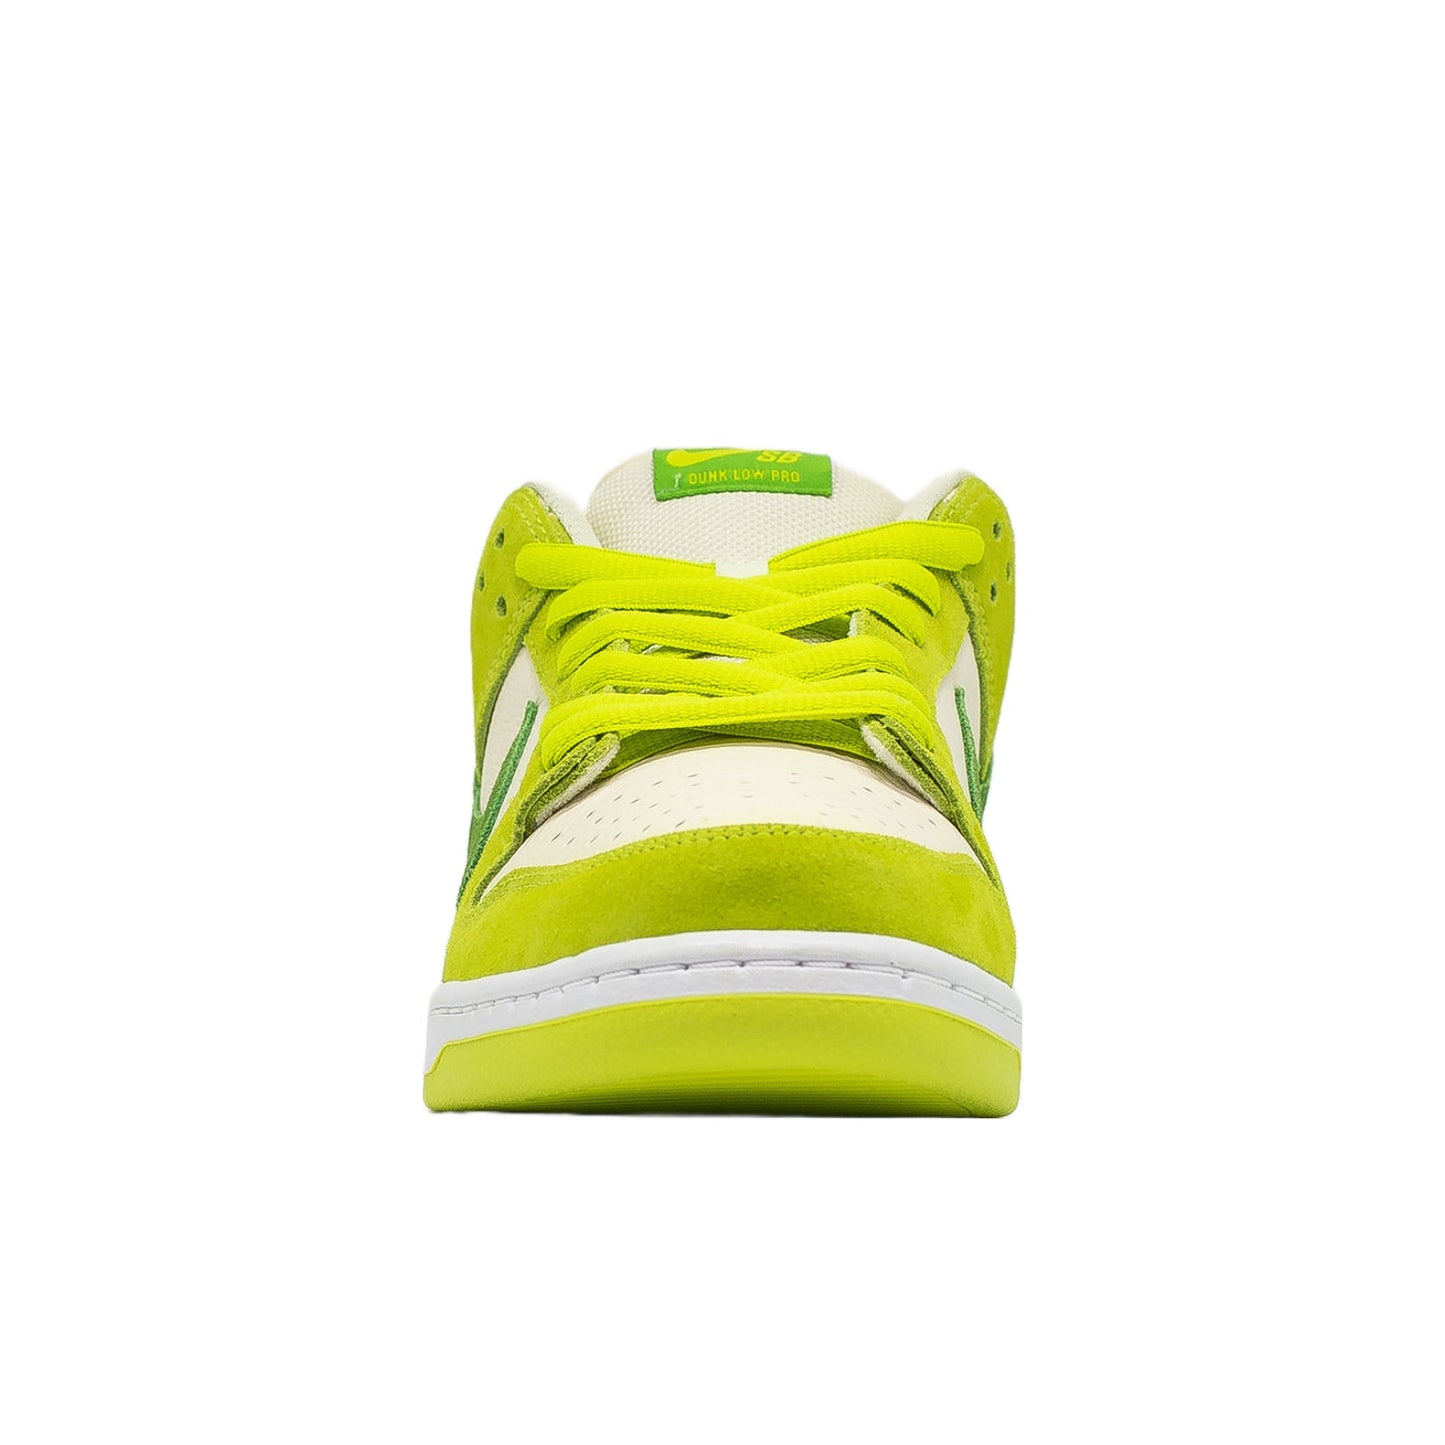 Nike SB Dunk Low, Fruity Pack - Green Apple